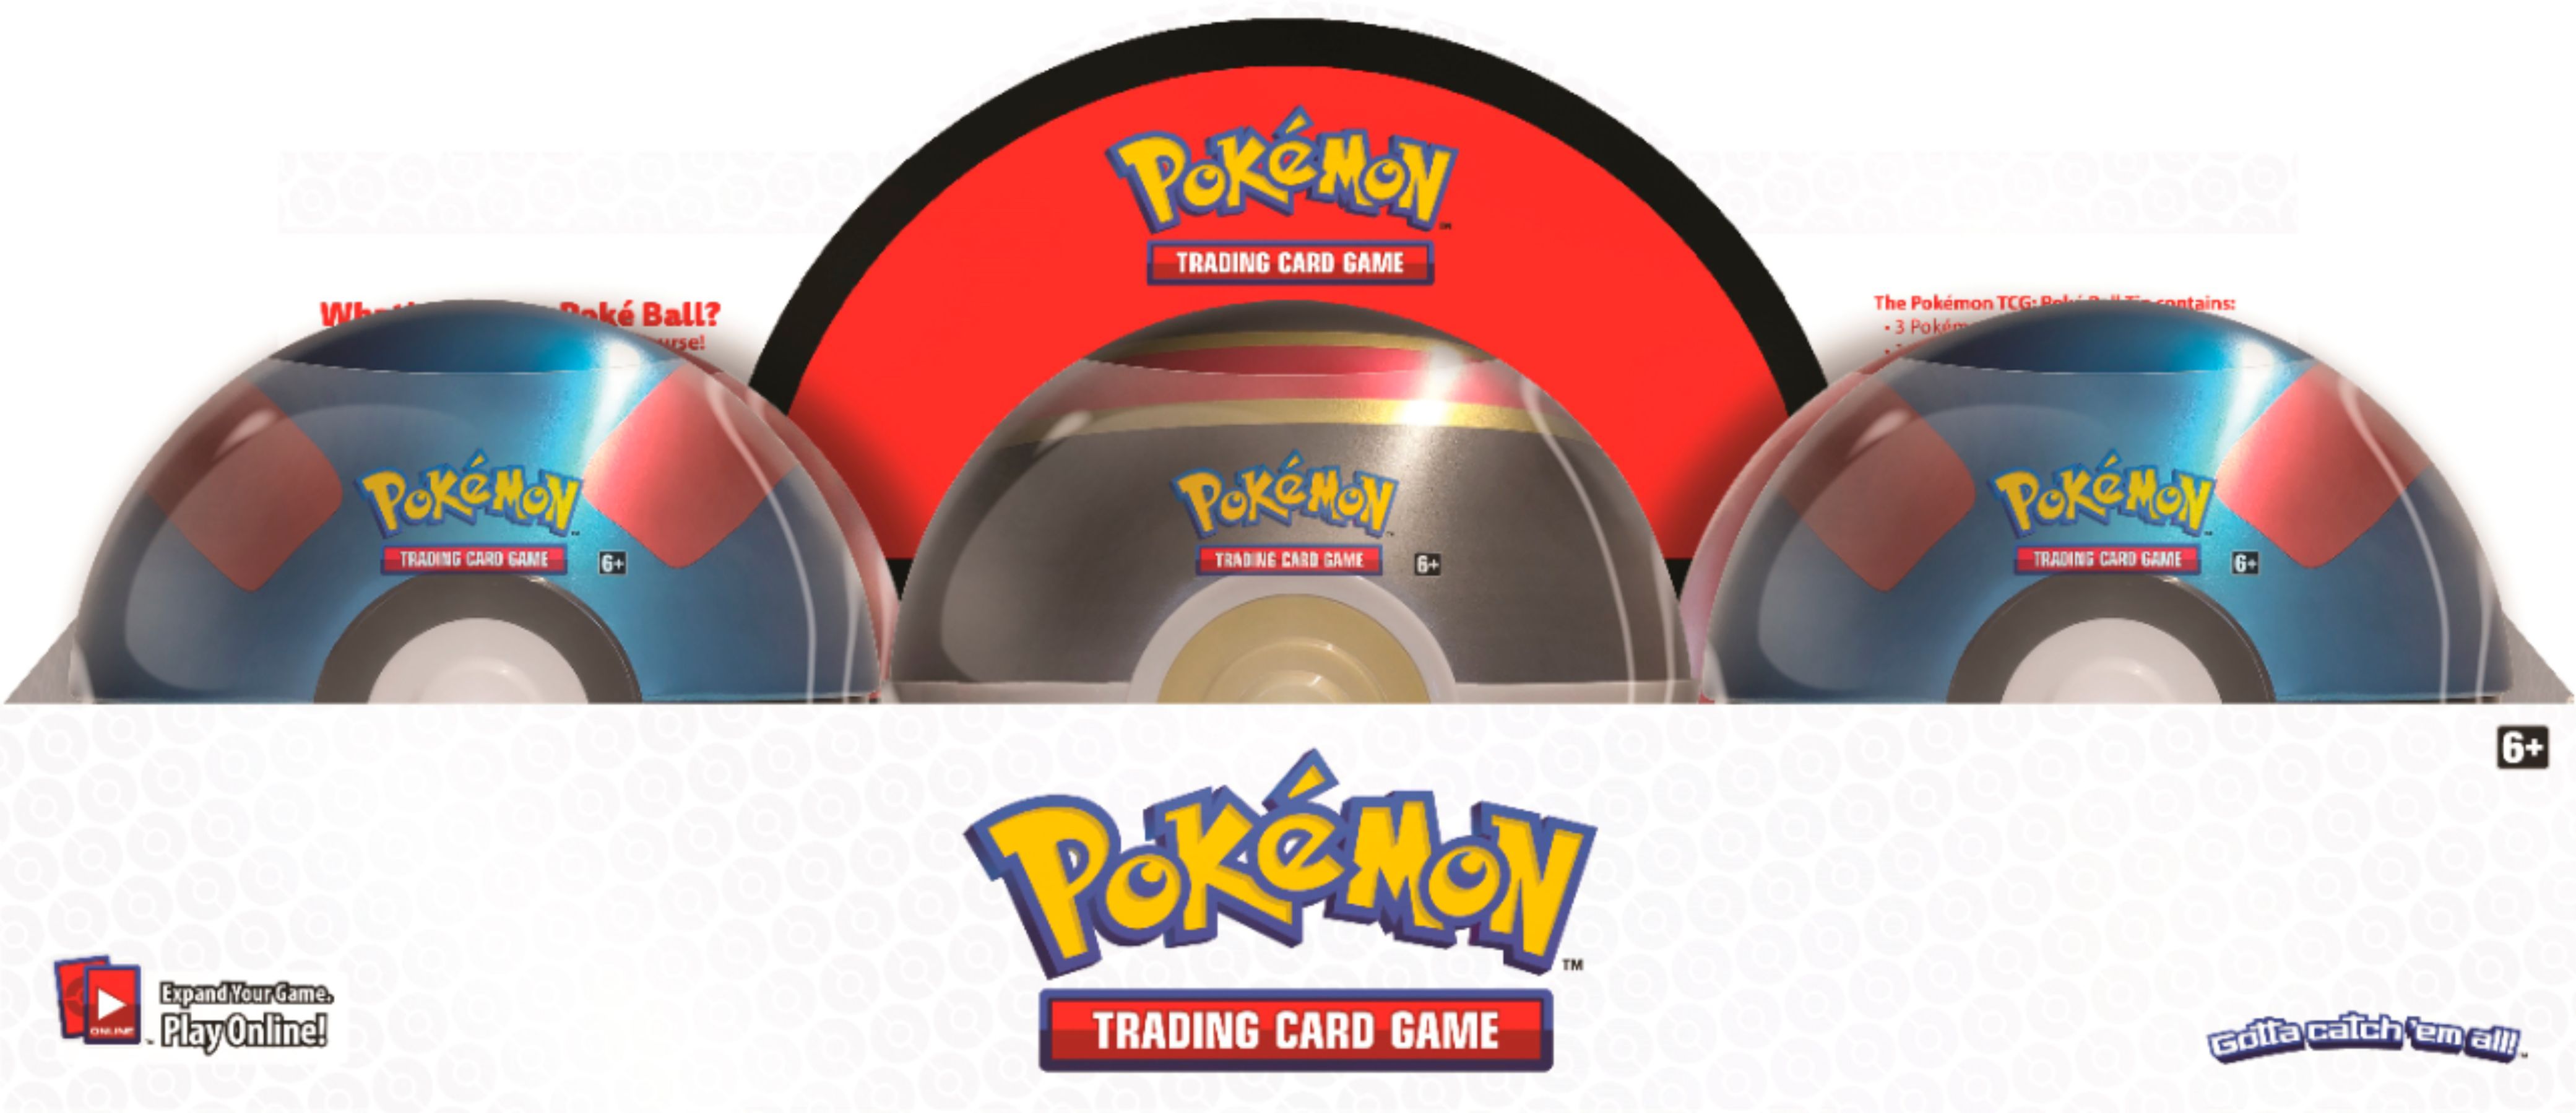 Pokemon TCG (PKMN): Poke Ball Tin Display (1 of 6 designs)